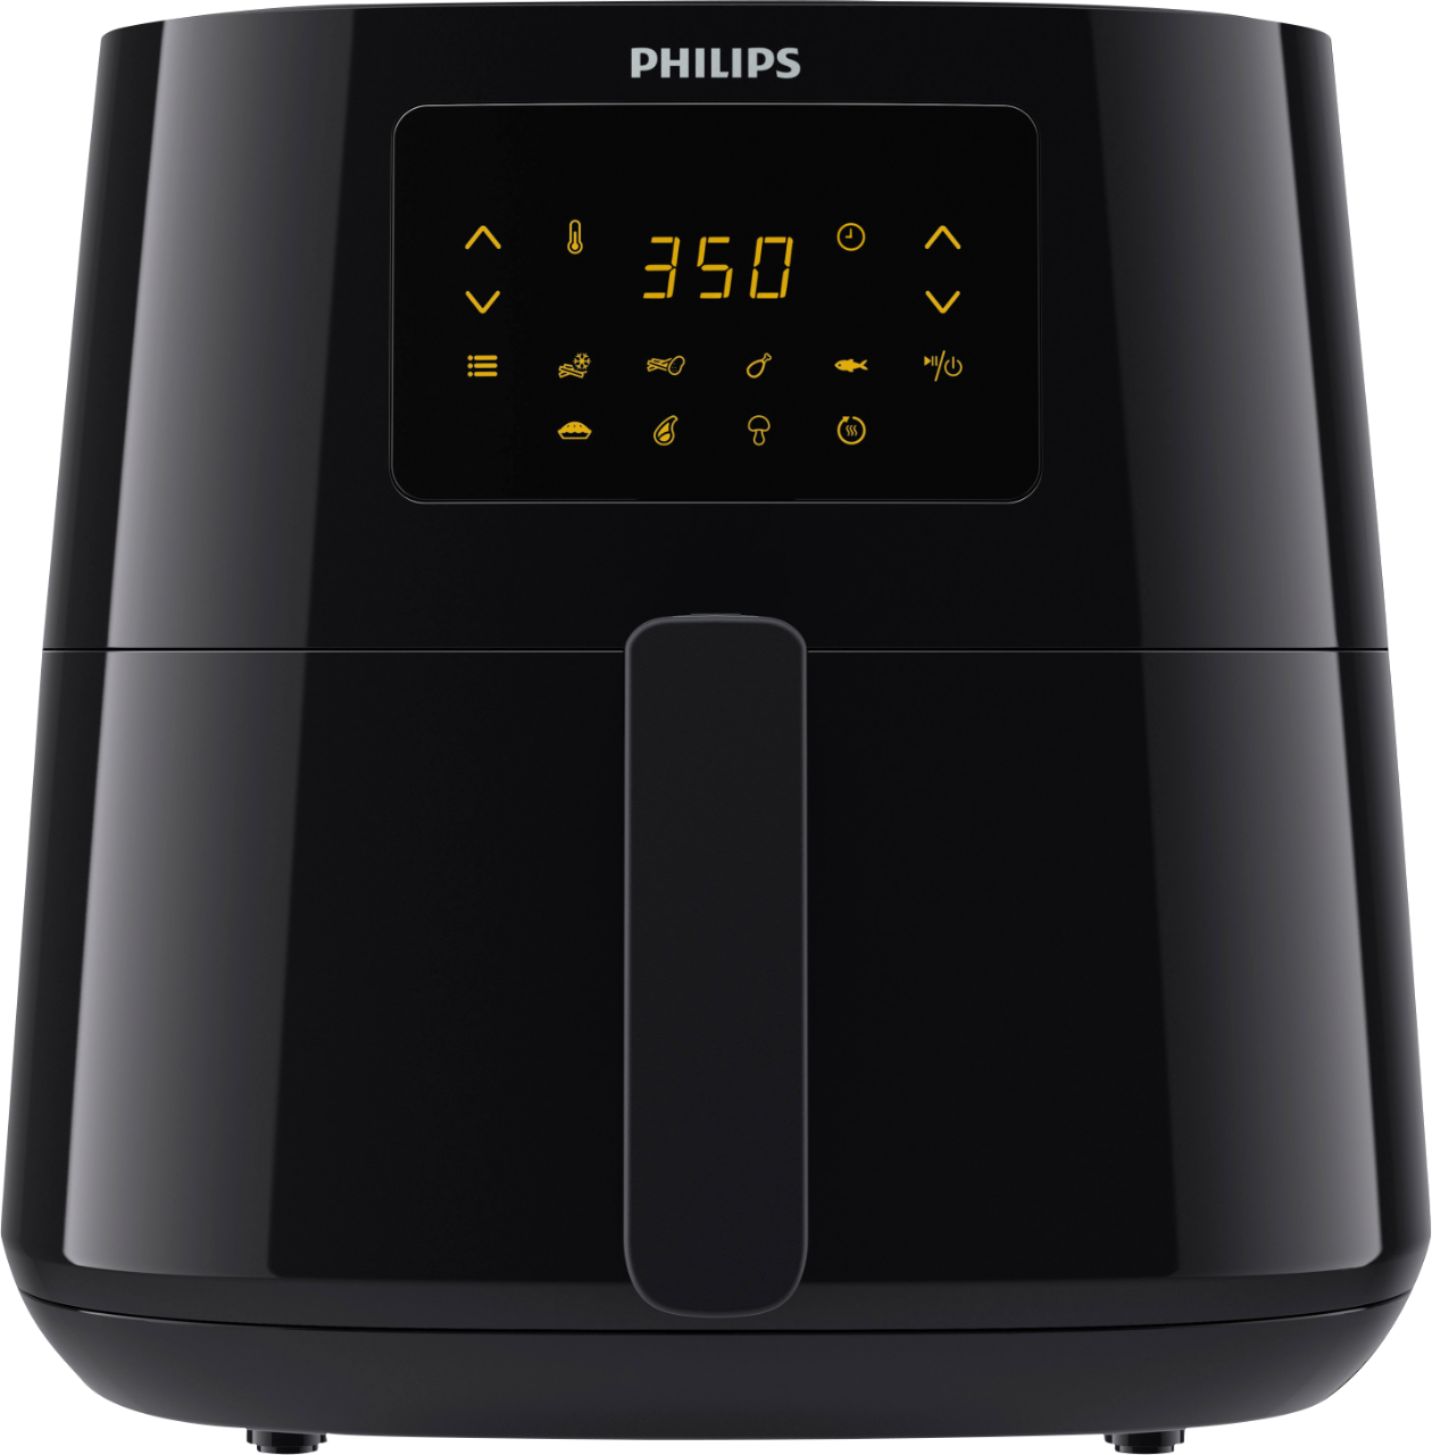 Philips Essential Airfryer-XL Digital with Rapid Air Technology (2.65lb/6.2L capacity)- HD9270/91 Black HD9270/91 - Best